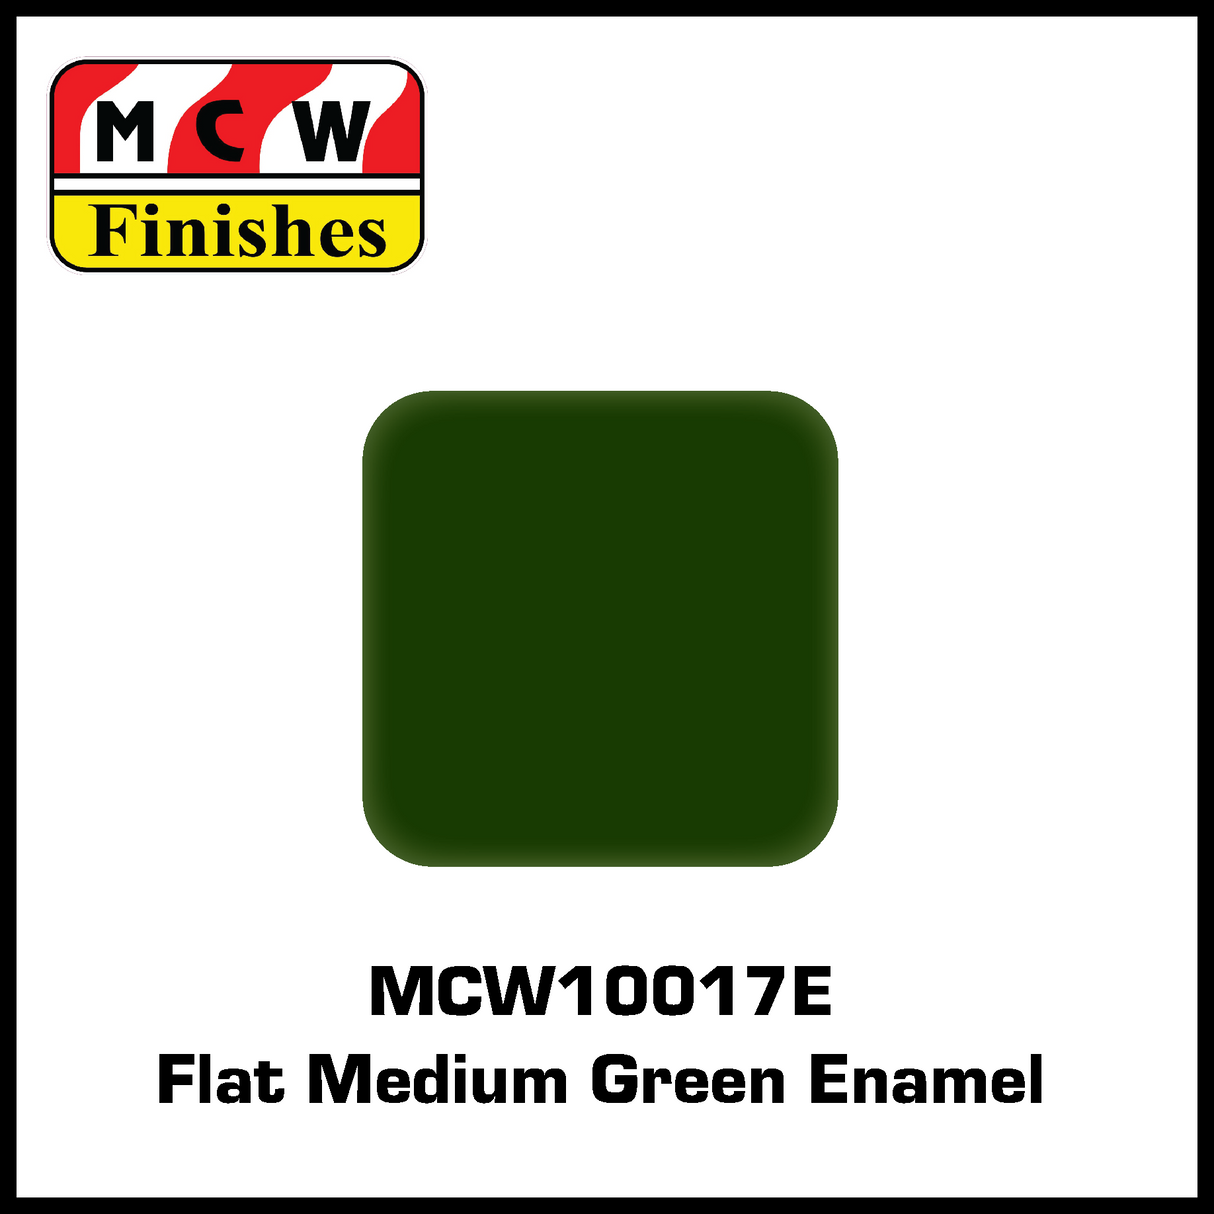 MCW Finishes Flat Medium Green Enamel